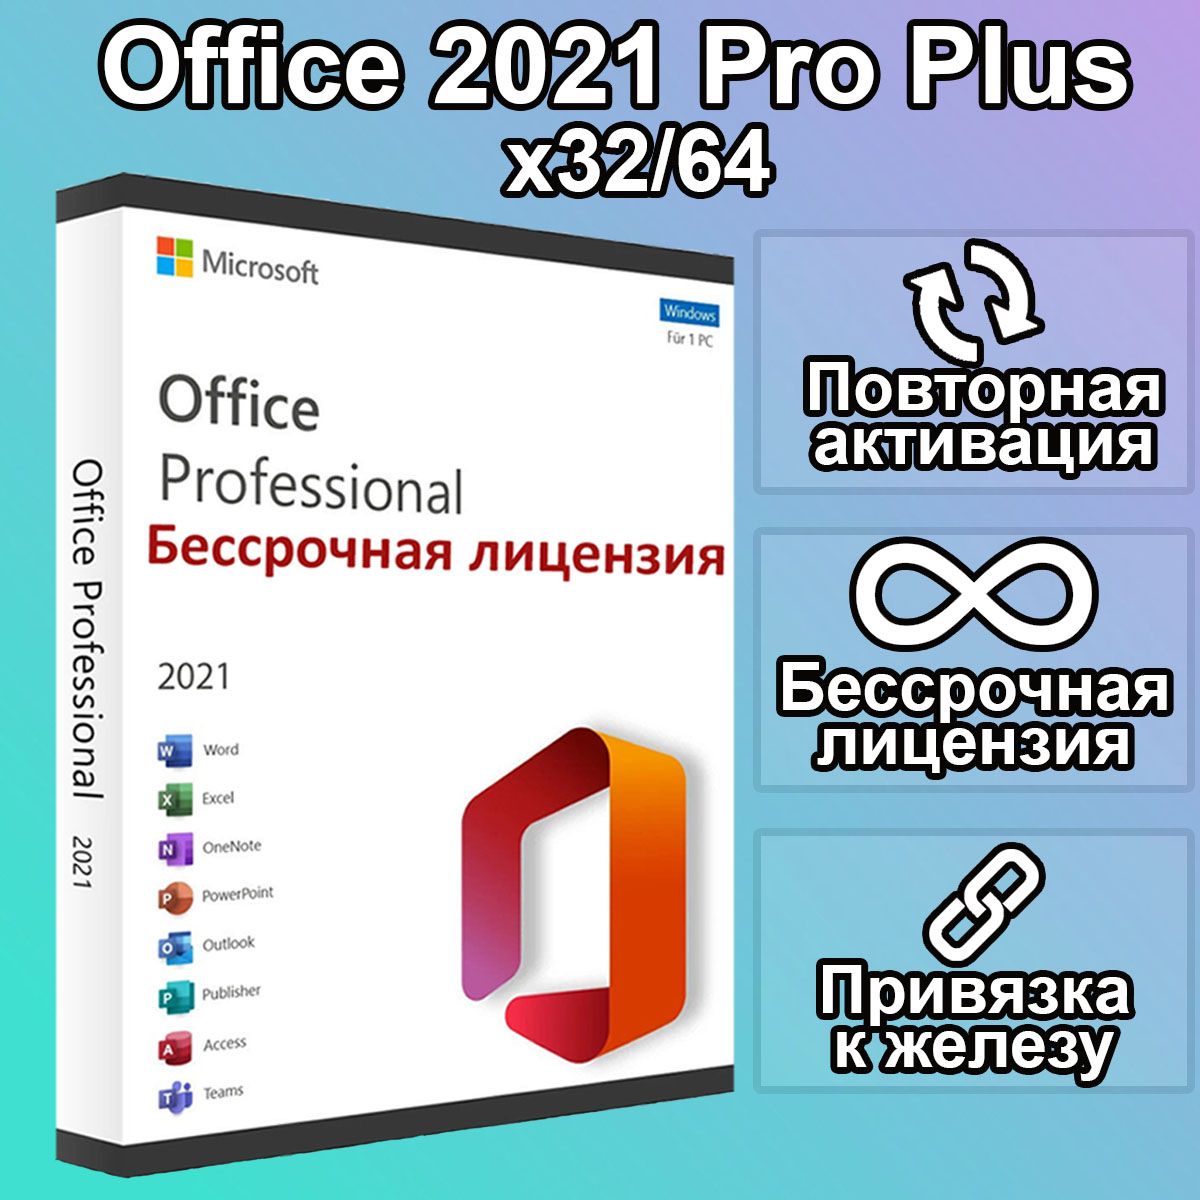 Microsoft Office 2021 Pro Plus бессрочный. Office 2021 Pro Plus бессрочный Windows. Офис 2021 про плюс купить. Office 2021 Pro Plus бессрочный без привязки.